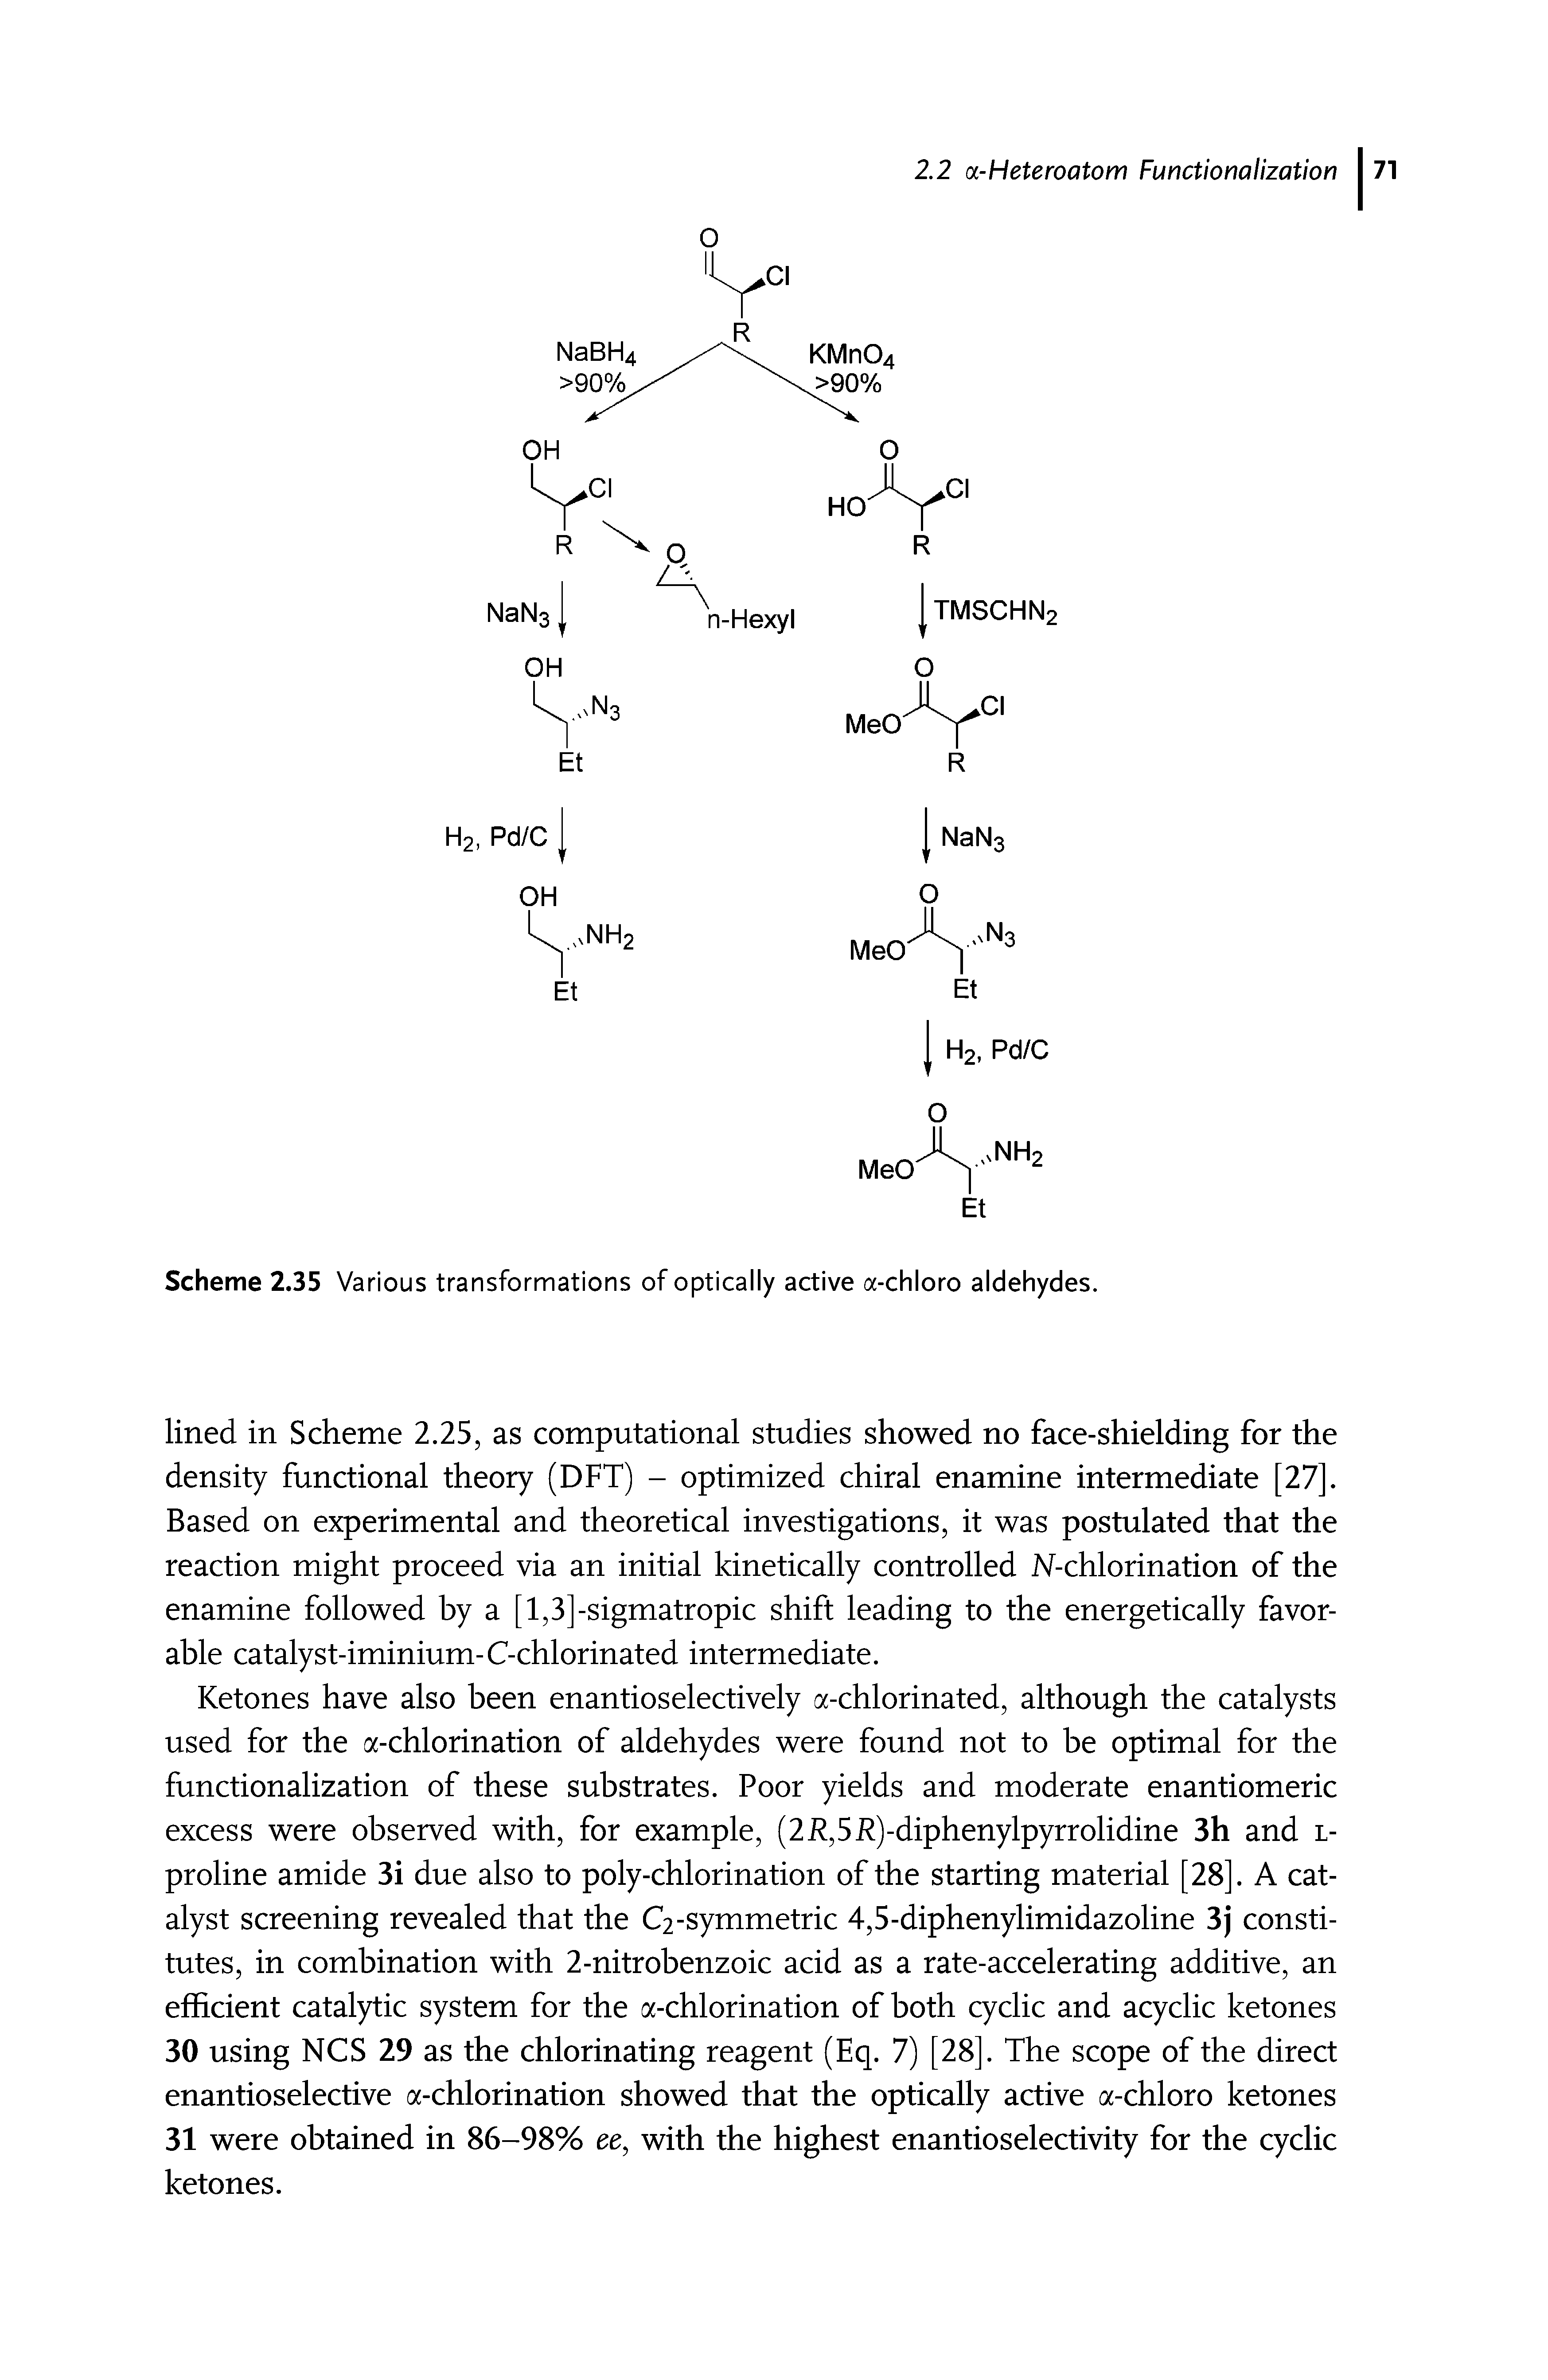 Scheme 2.35 Various transformations of optically active a-chloro aldehydes.